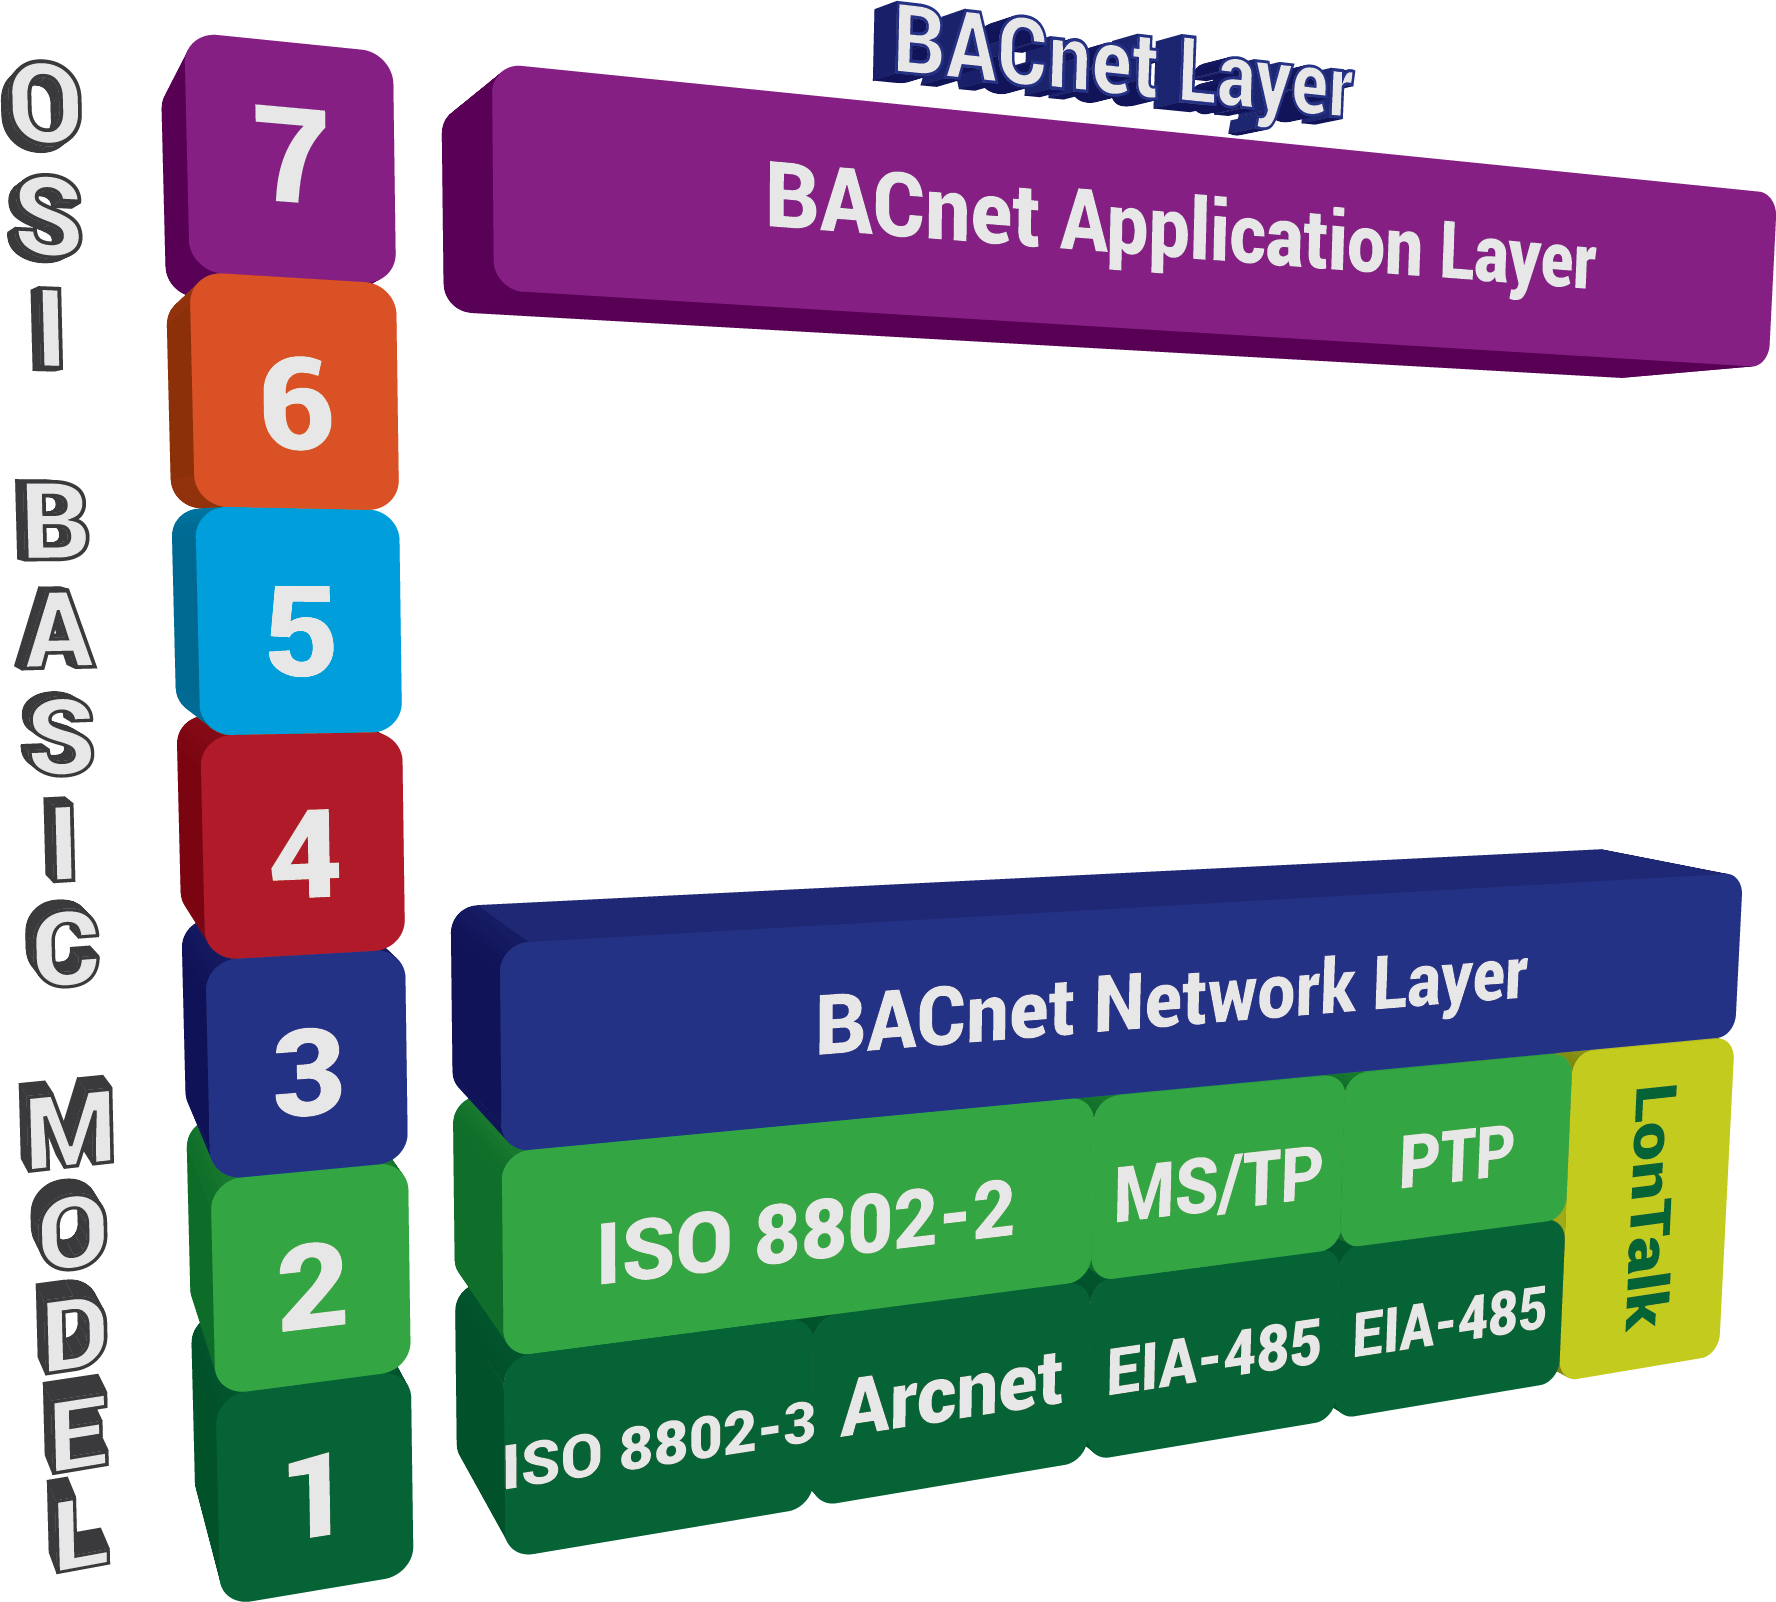 BACnet layers